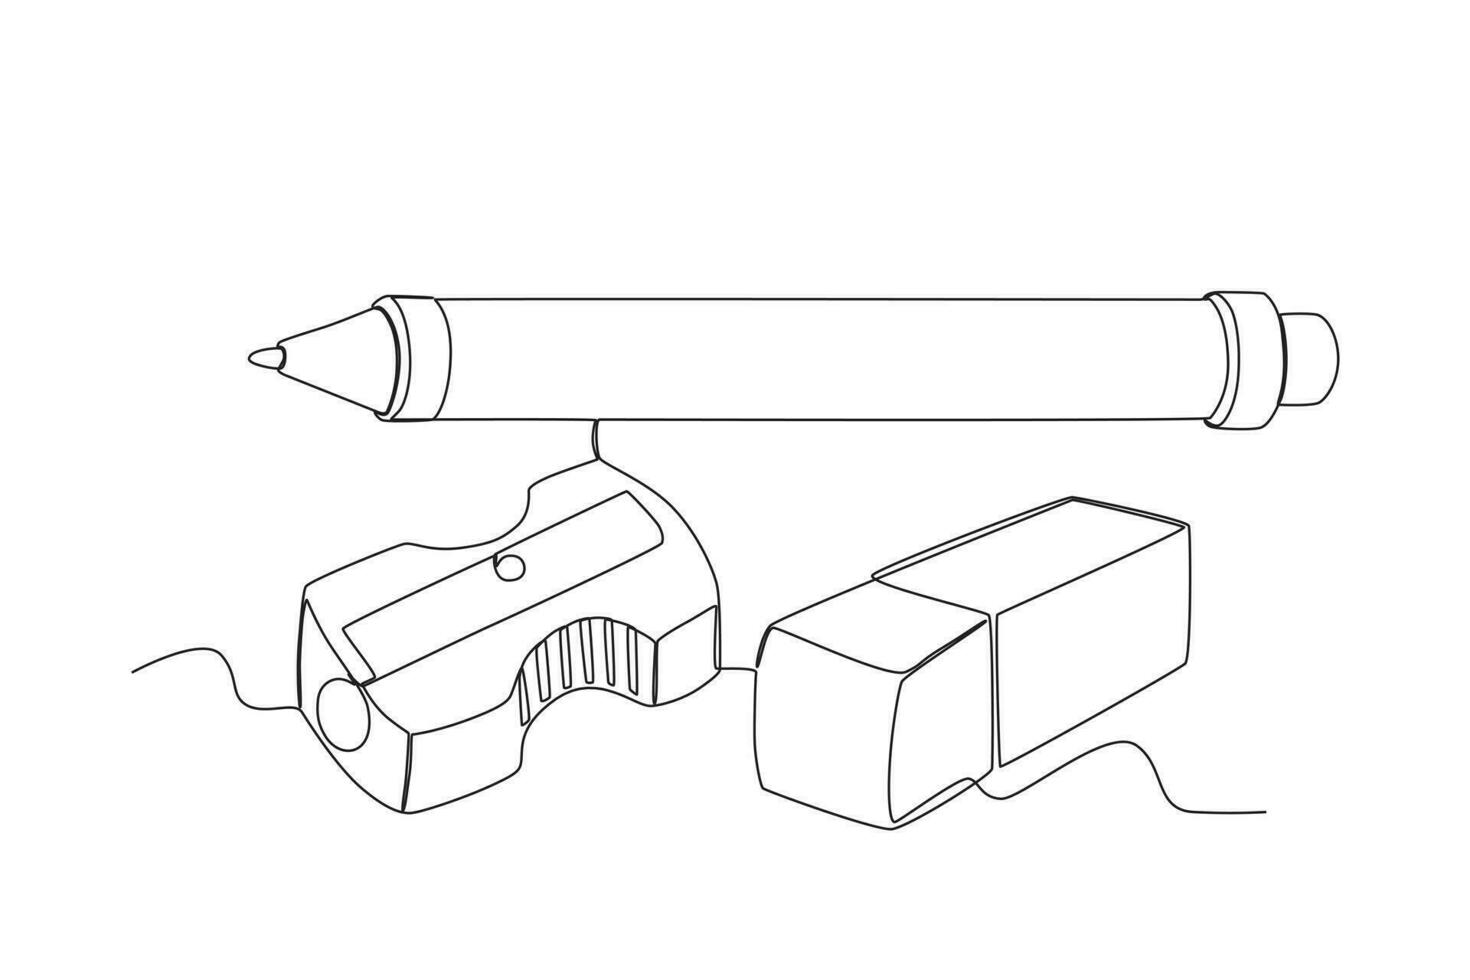 A pen, sharpener, and rubber eraser vector